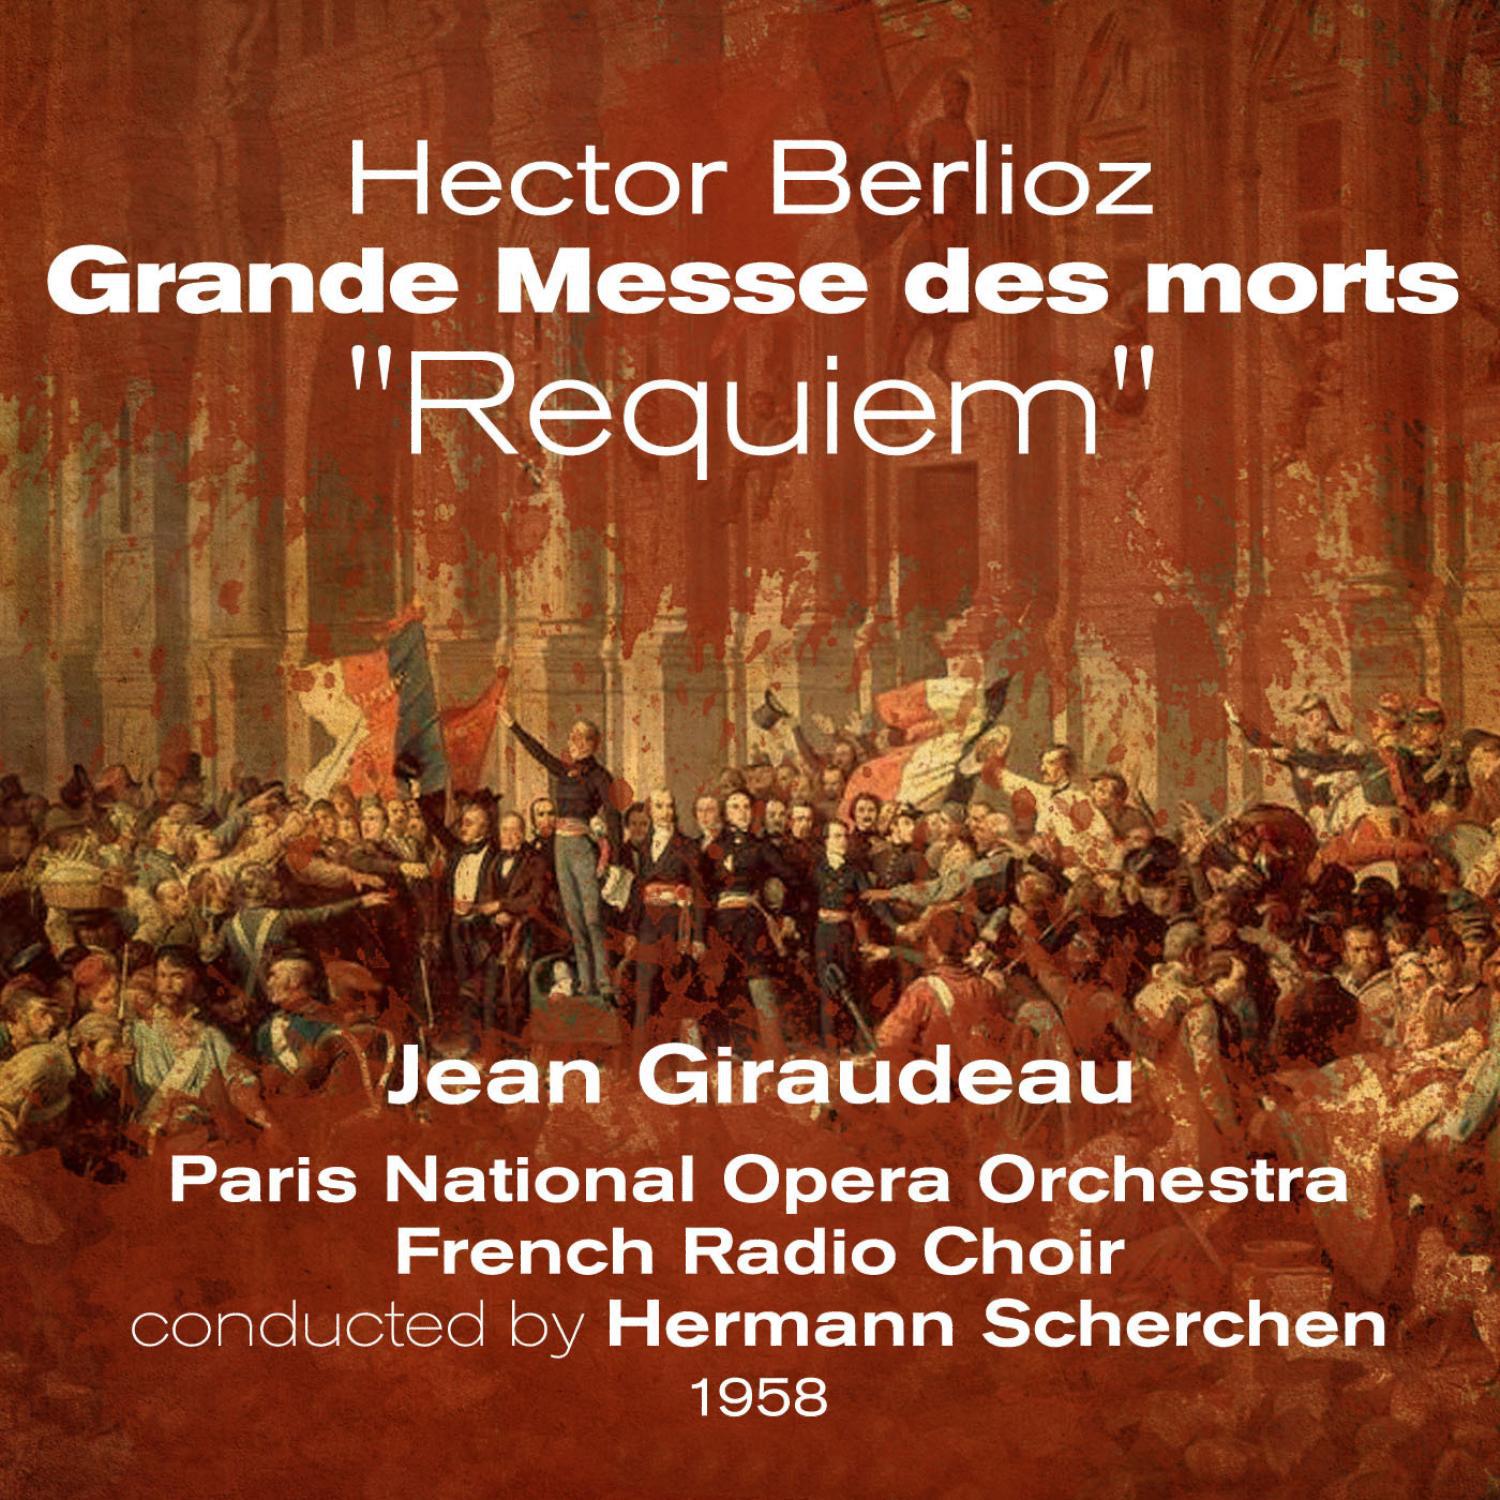 Jean Giraudeau - Hector Berlioz: The Grande Messe des morts, Op. 5, 